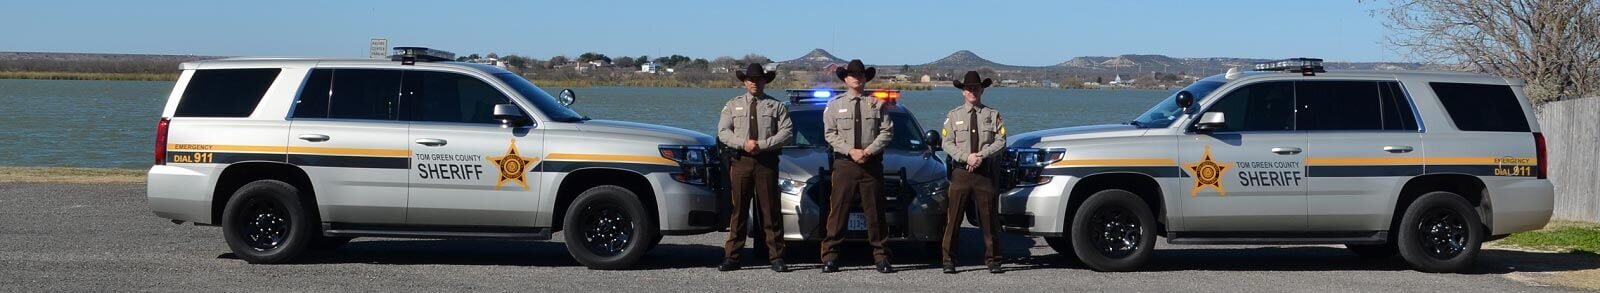 Tom Green County Sheriff Deputies and Vehicles